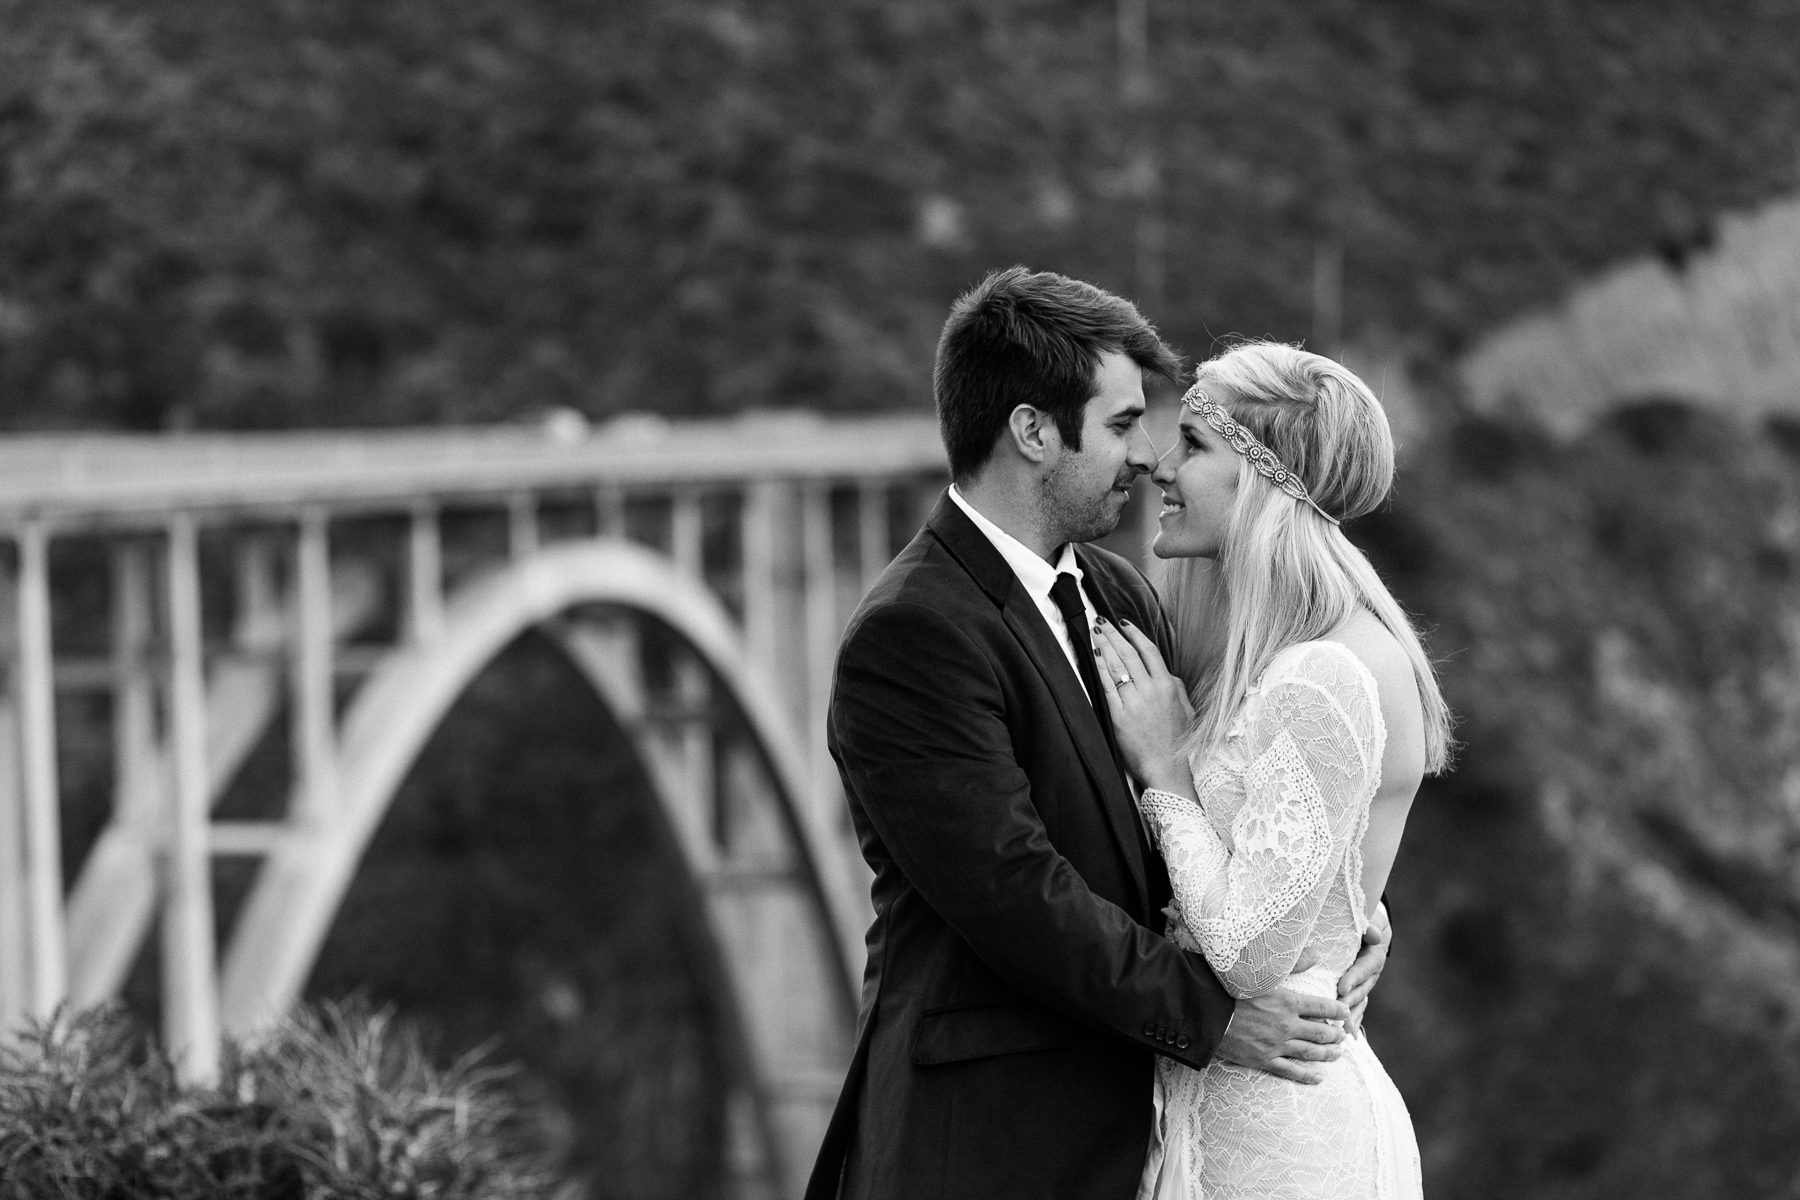 Boho bride embraces her groom in front of Bixby Bridge in Big Sur